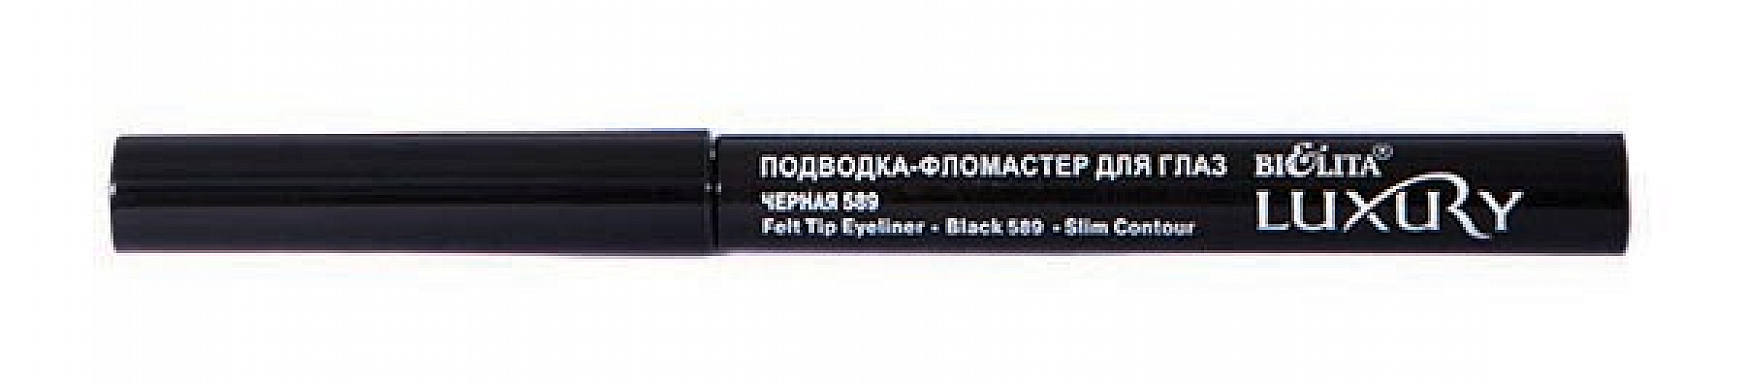 ПОДВОДКА-ФЛОМАСТЕР для глаз "LUXURY" тон 589 черная